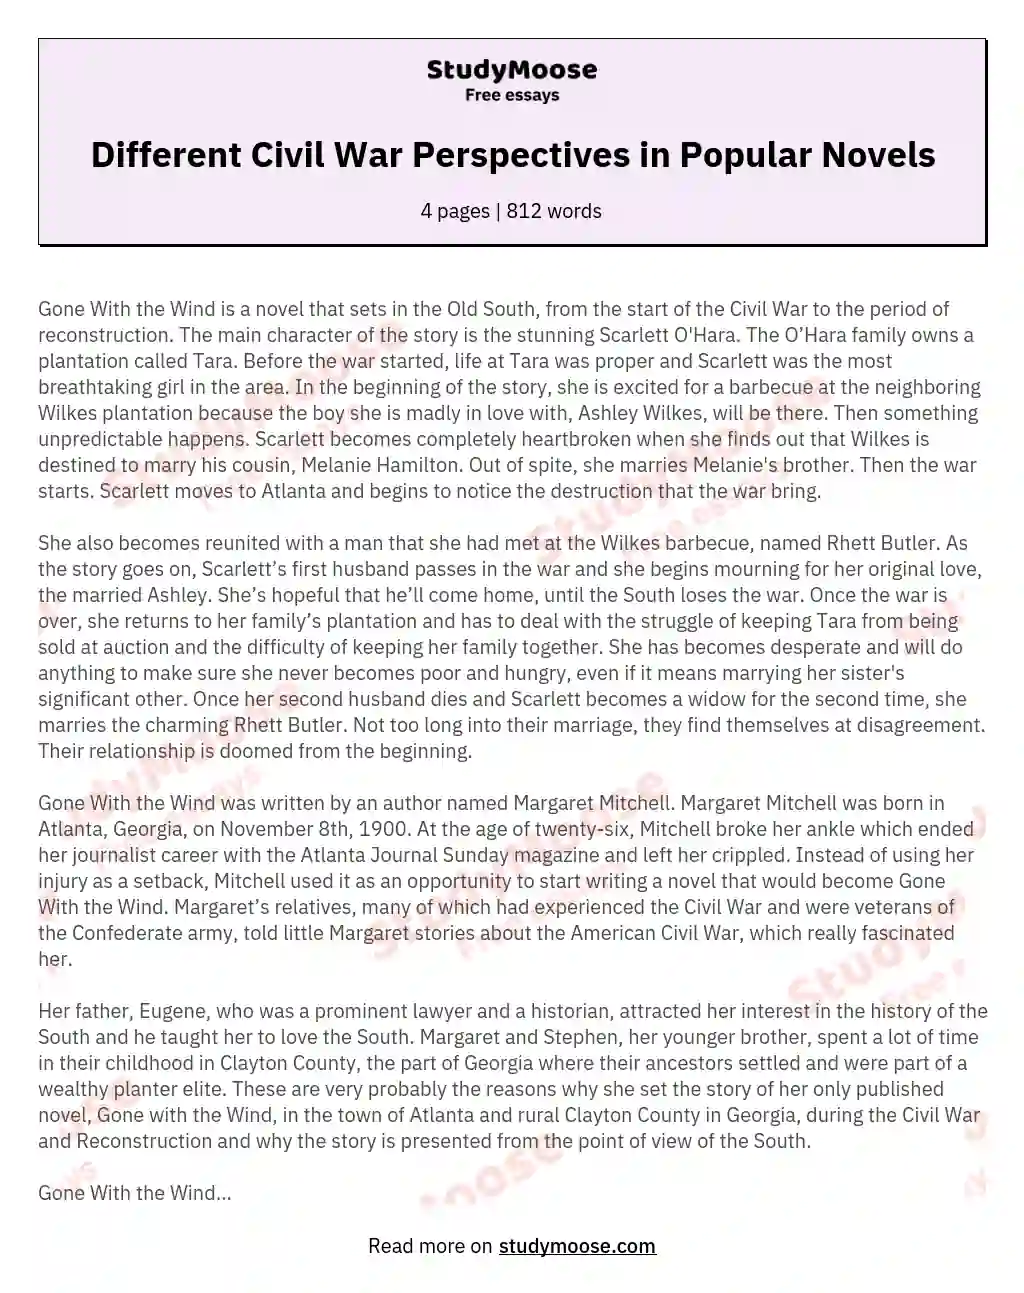 Different Civil War Perspectives in Popular Novels essay